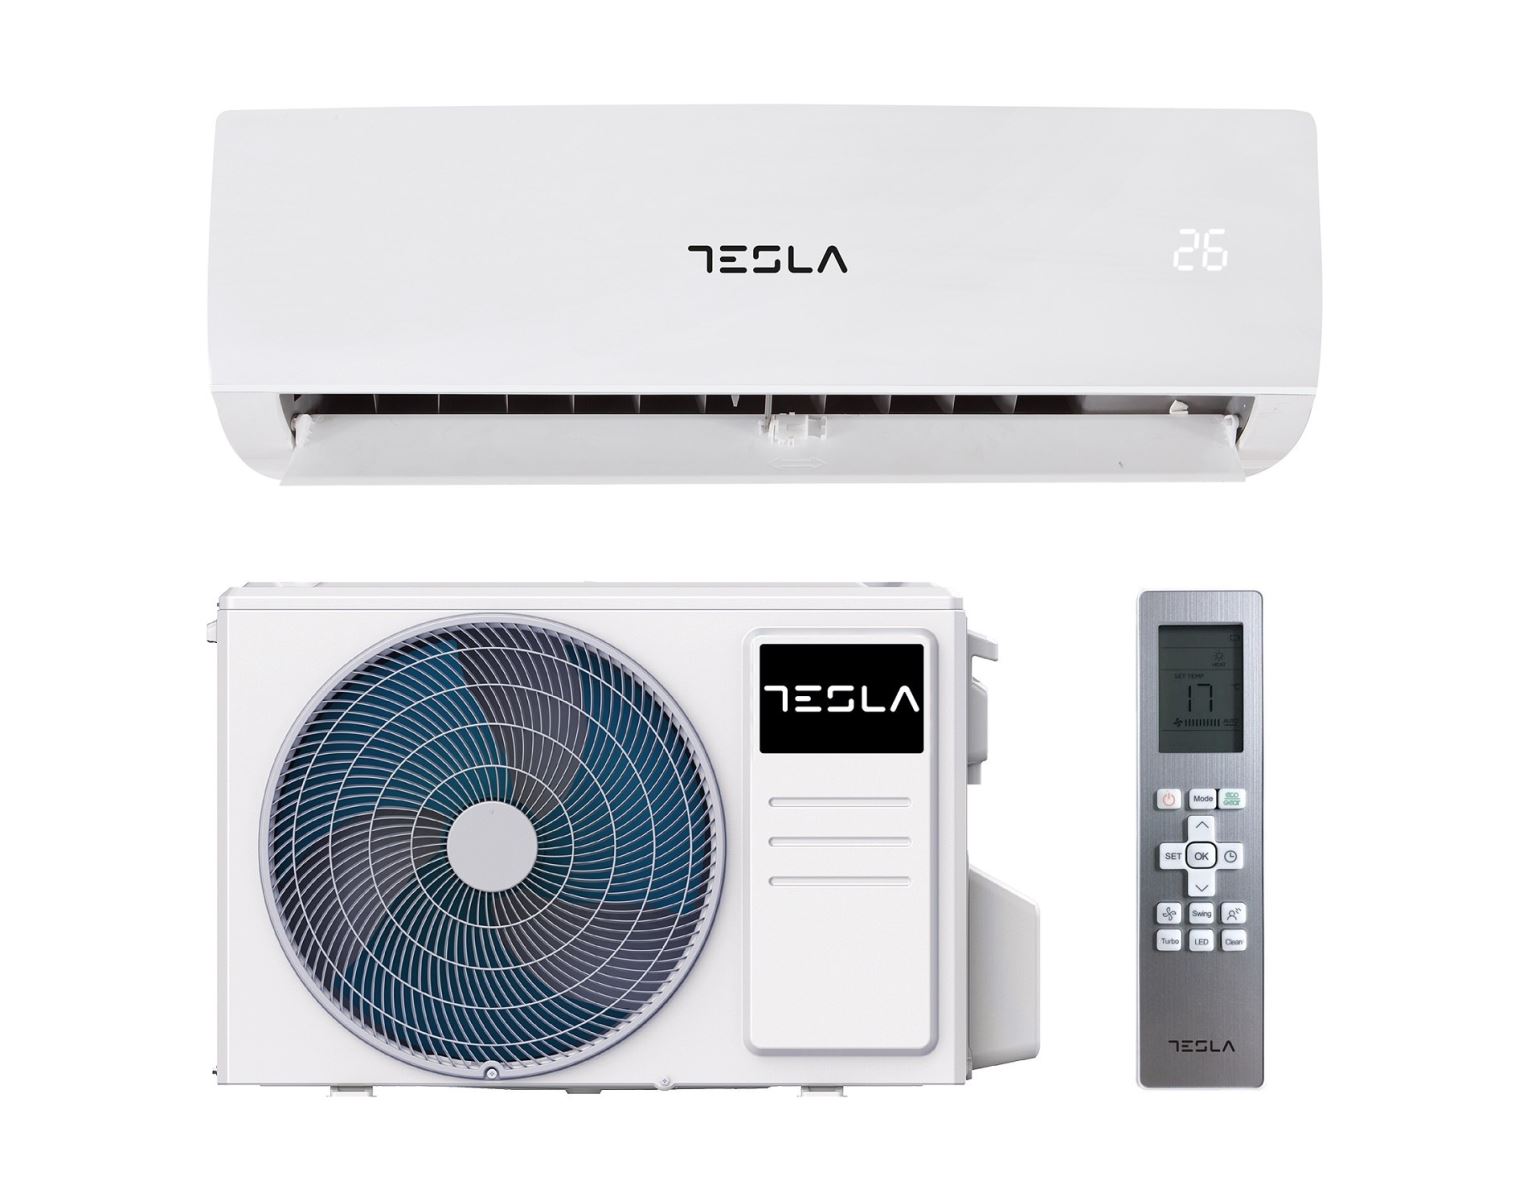 Aer conditionat Tesla TM36AF21-1232IAW, 12000 BTU, Wi-Fi, Mod Sleep, Repornire Automata, Functie  I Remote, Clasa A++ (racire)/A+ (incalzire), Alb